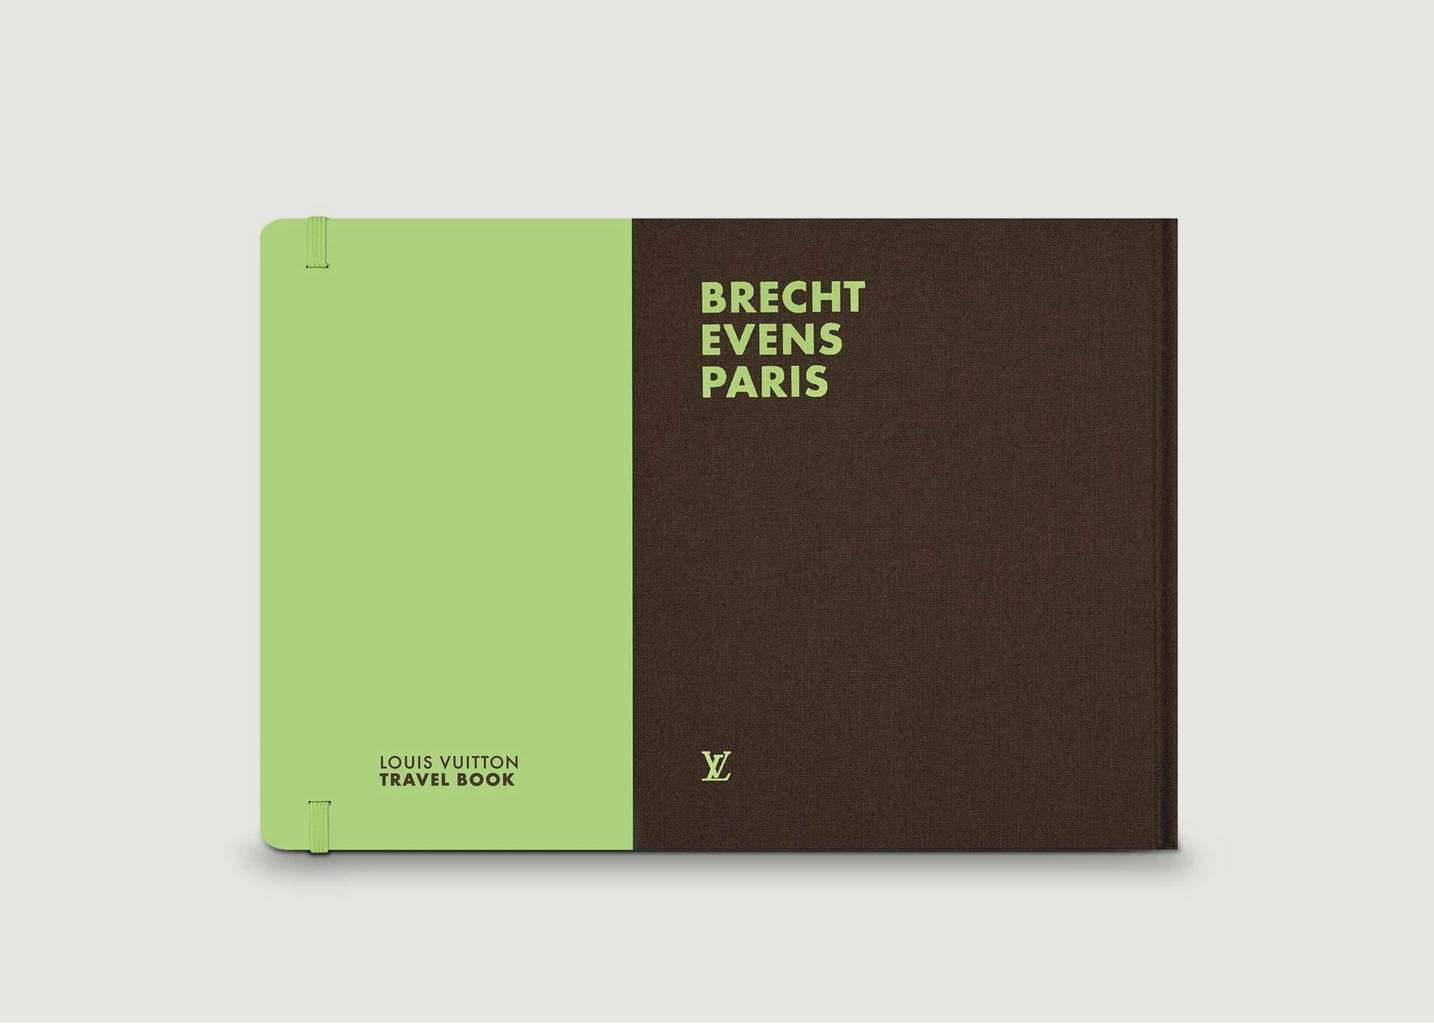 Paris Travel Book Brecht Events - Louis Vuitton Travel Book